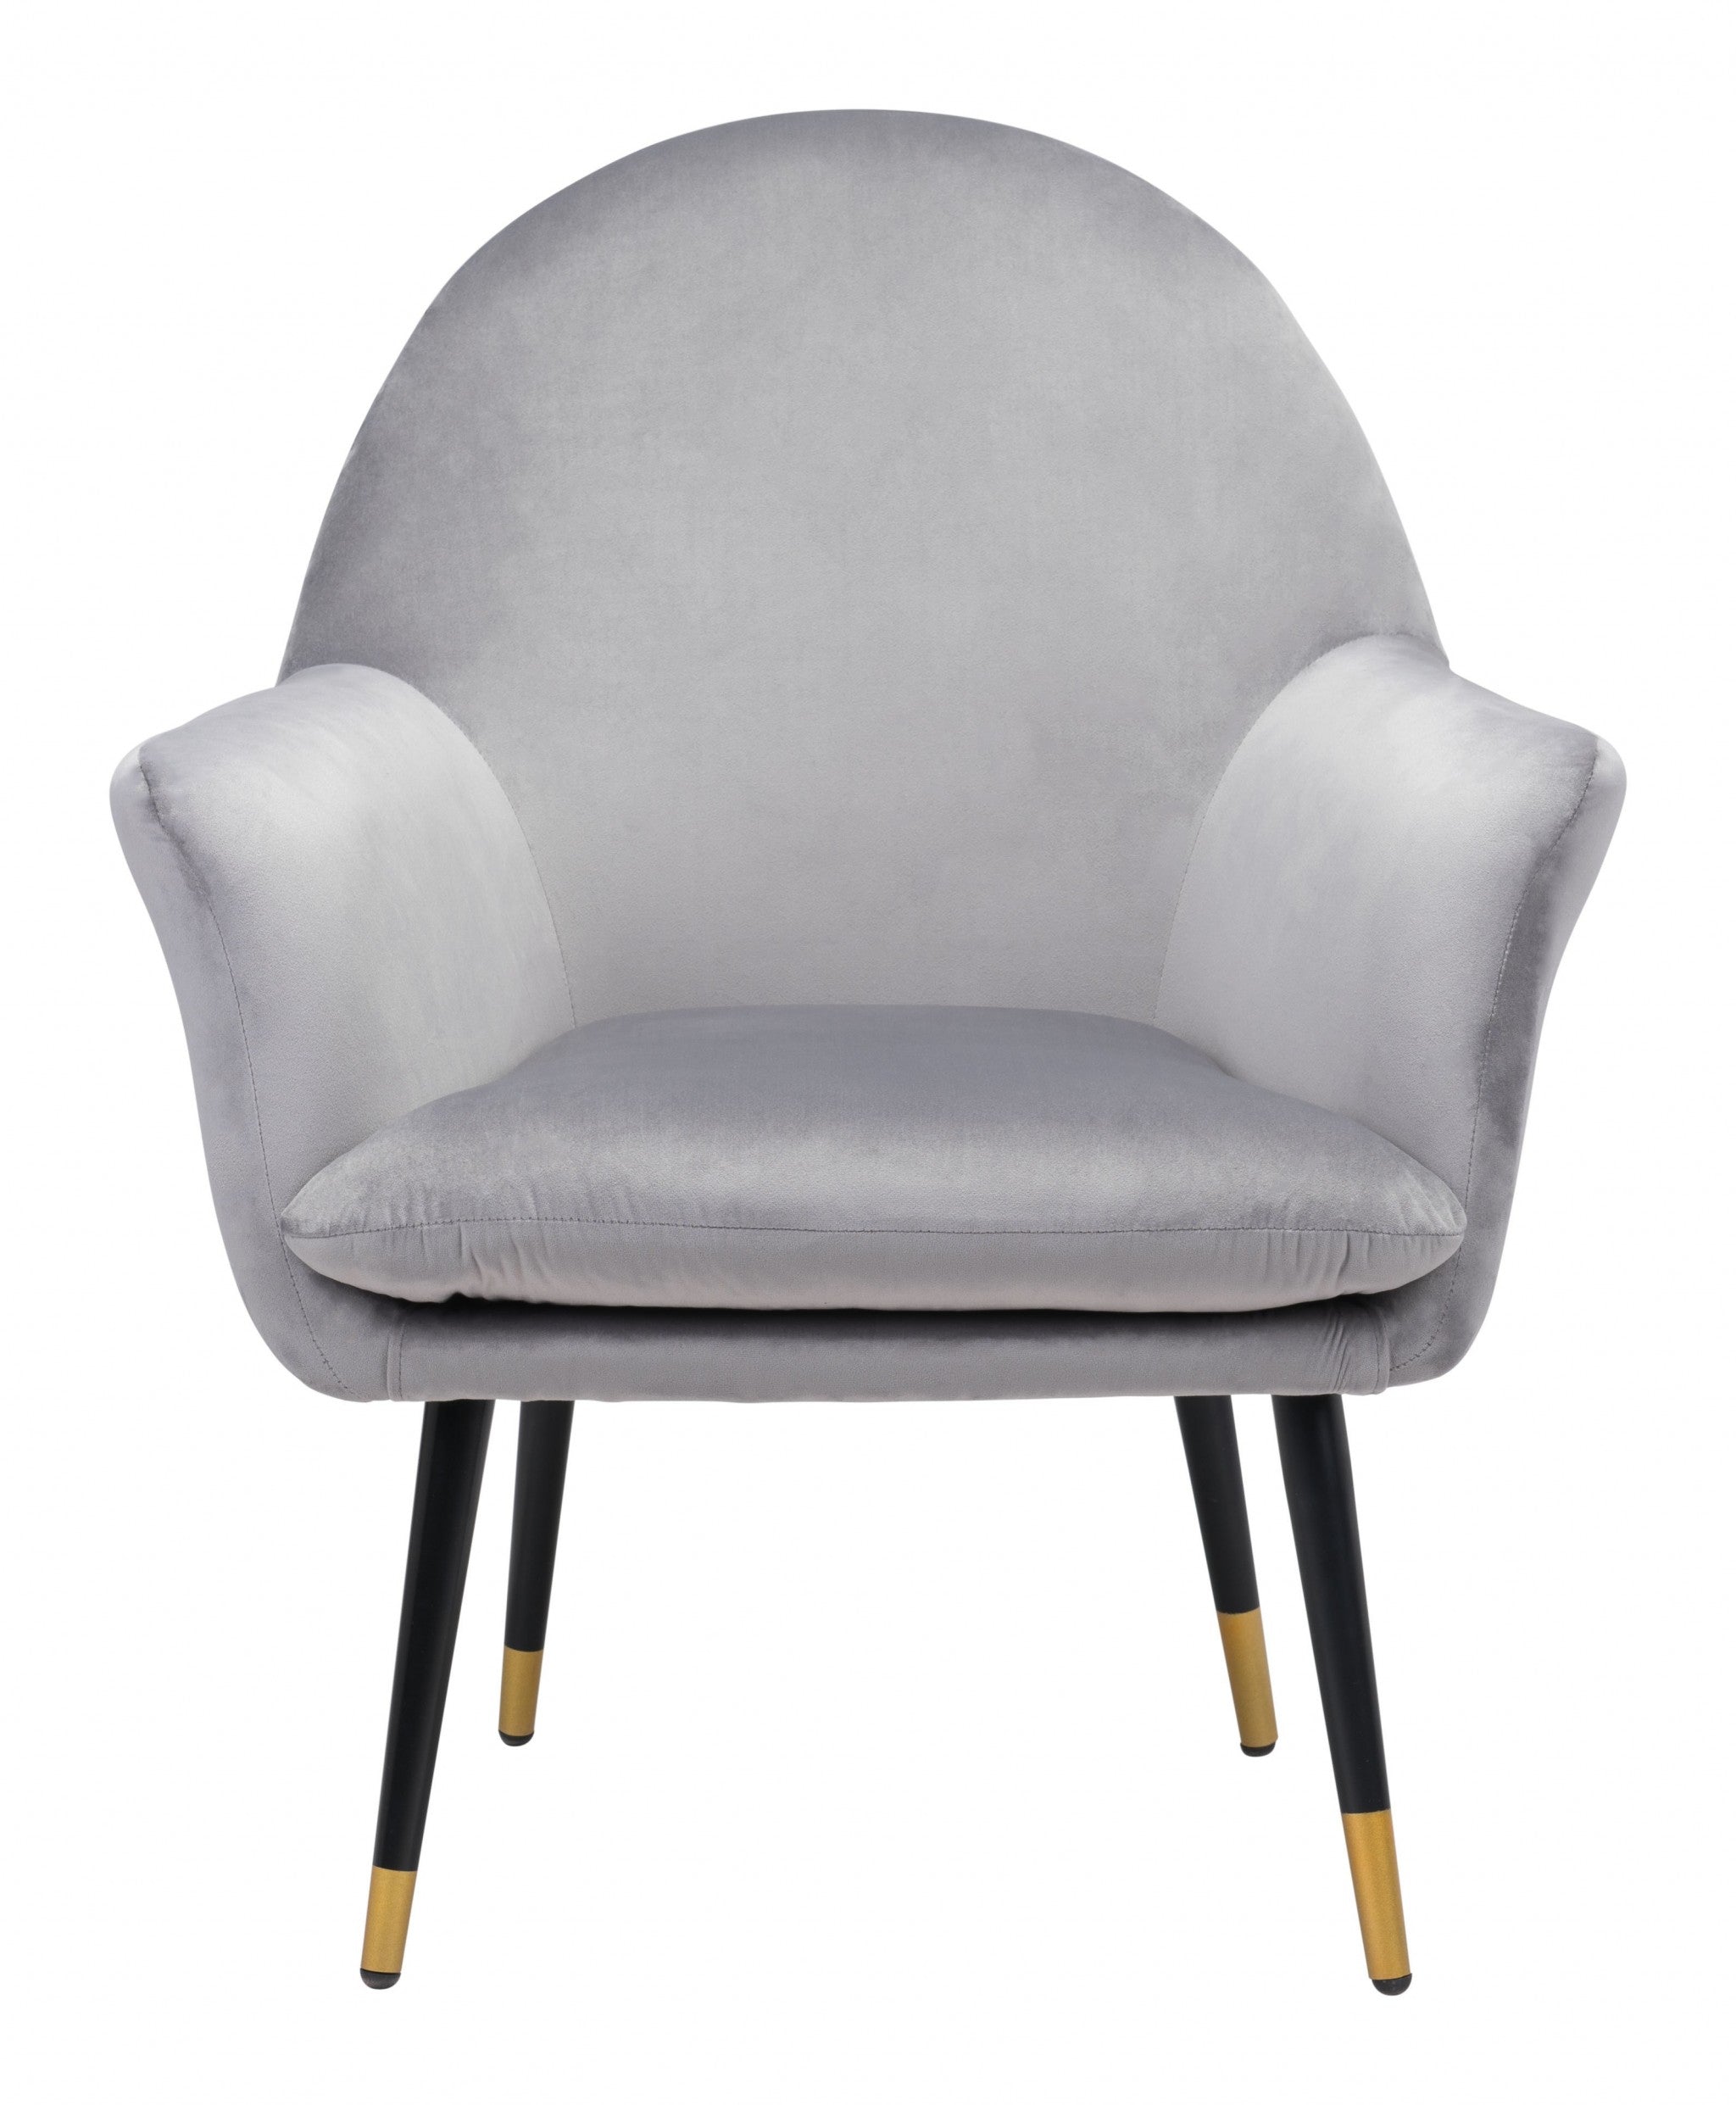 30" Gray And Gold Velvet Arm Chair